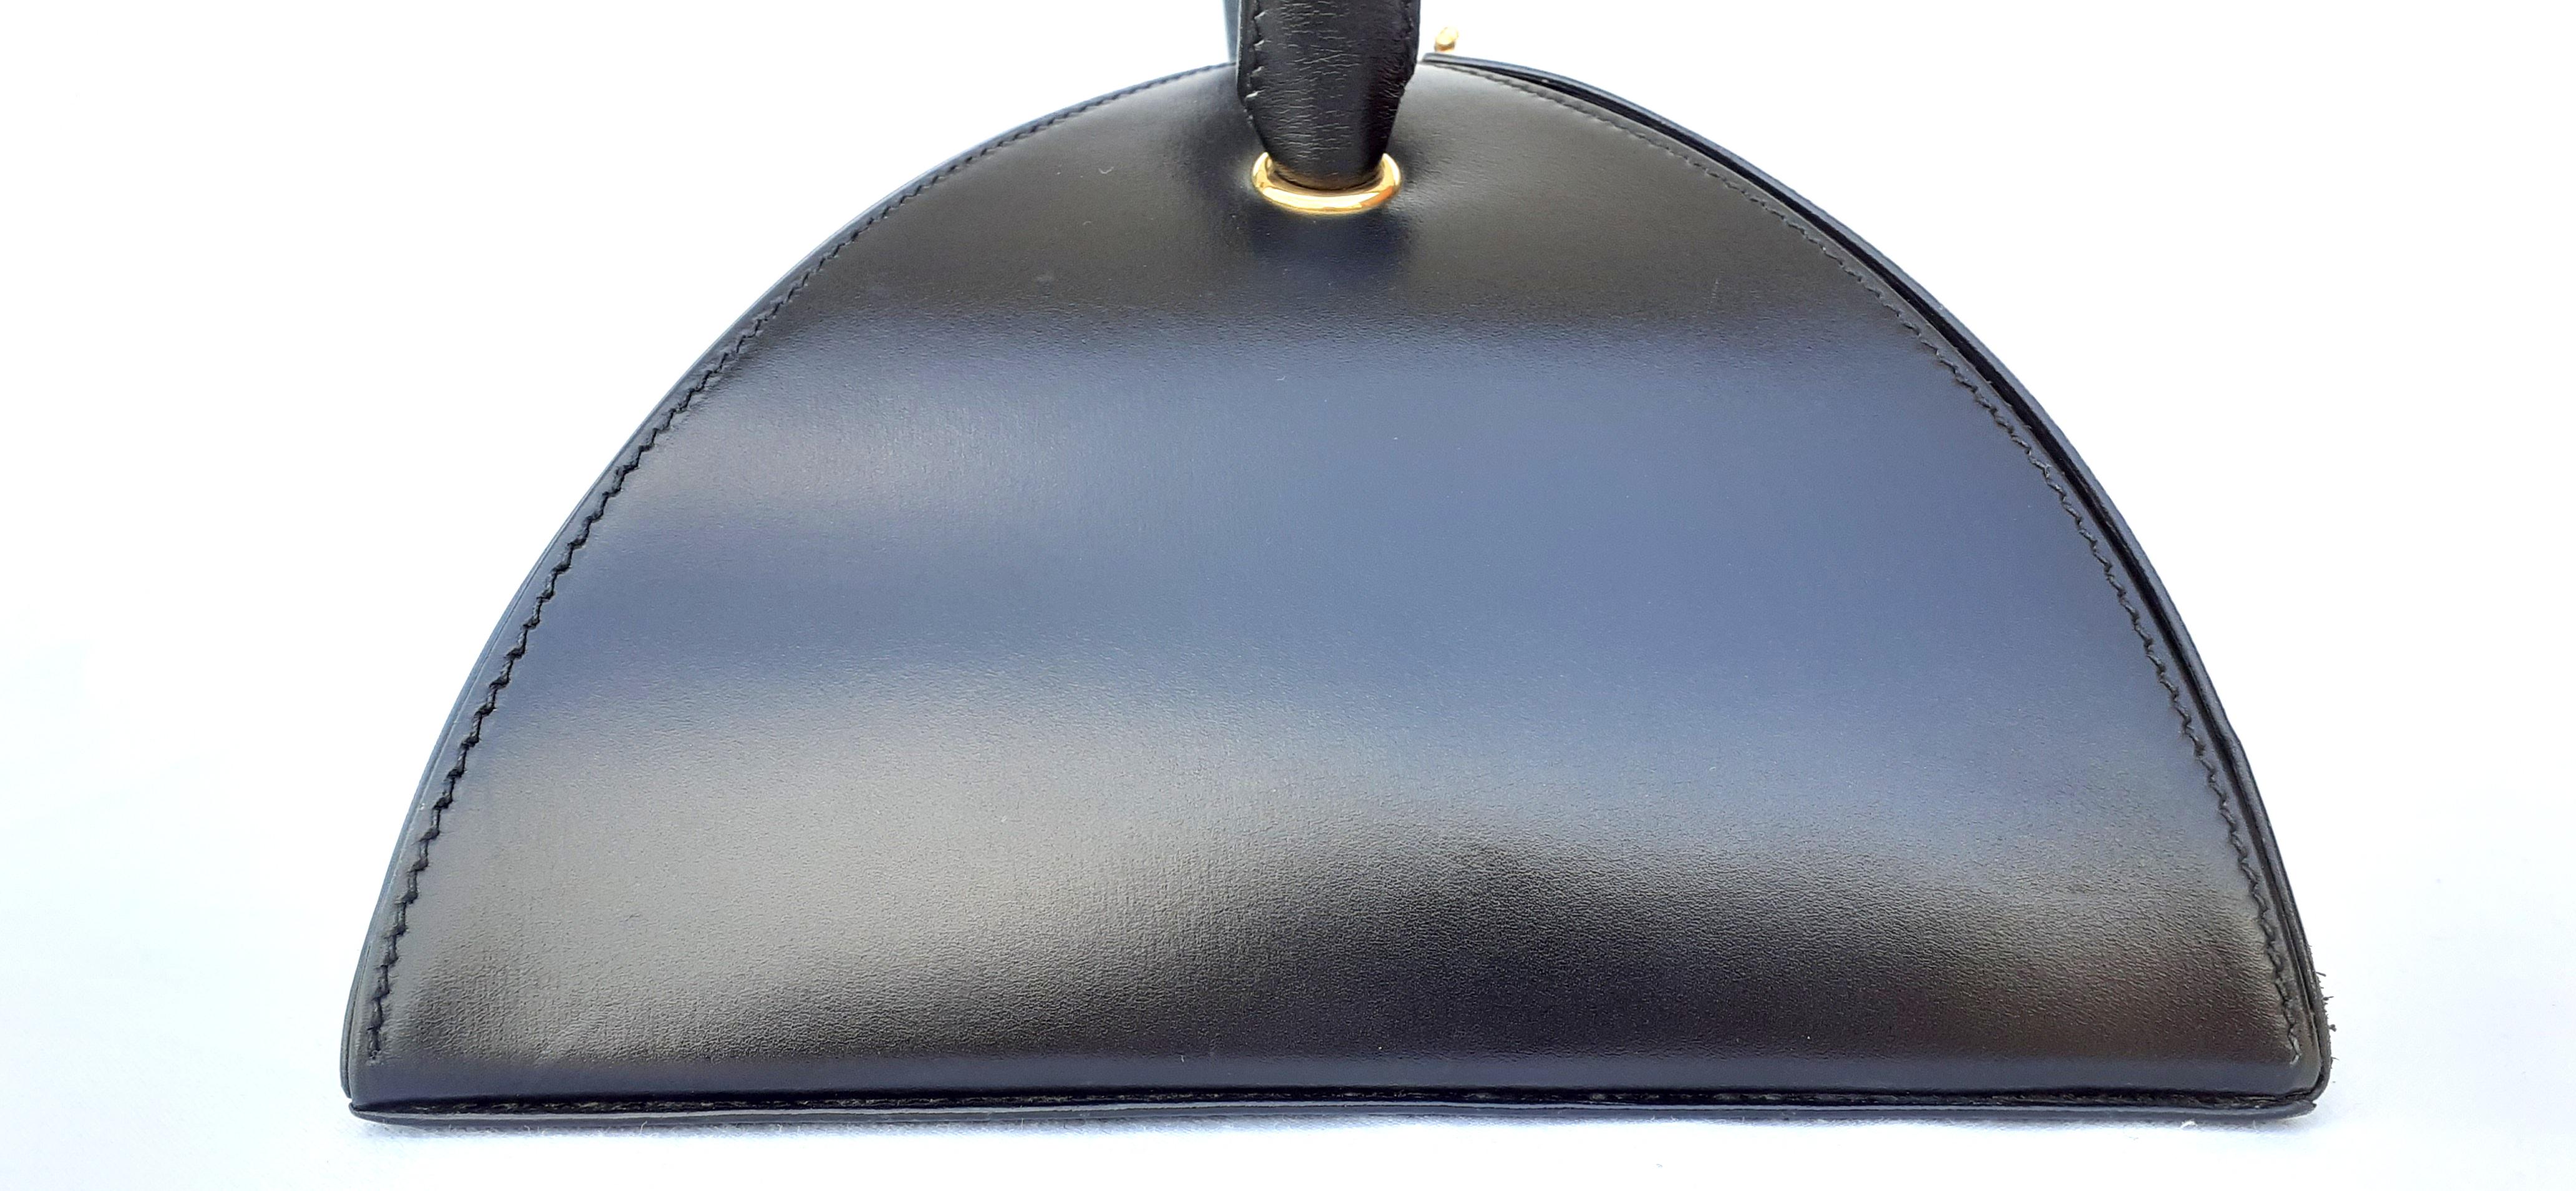 Exceptional Hermès Vintage Tee Time Bag Minaudiere Black Box Leather Ghw RARE 2